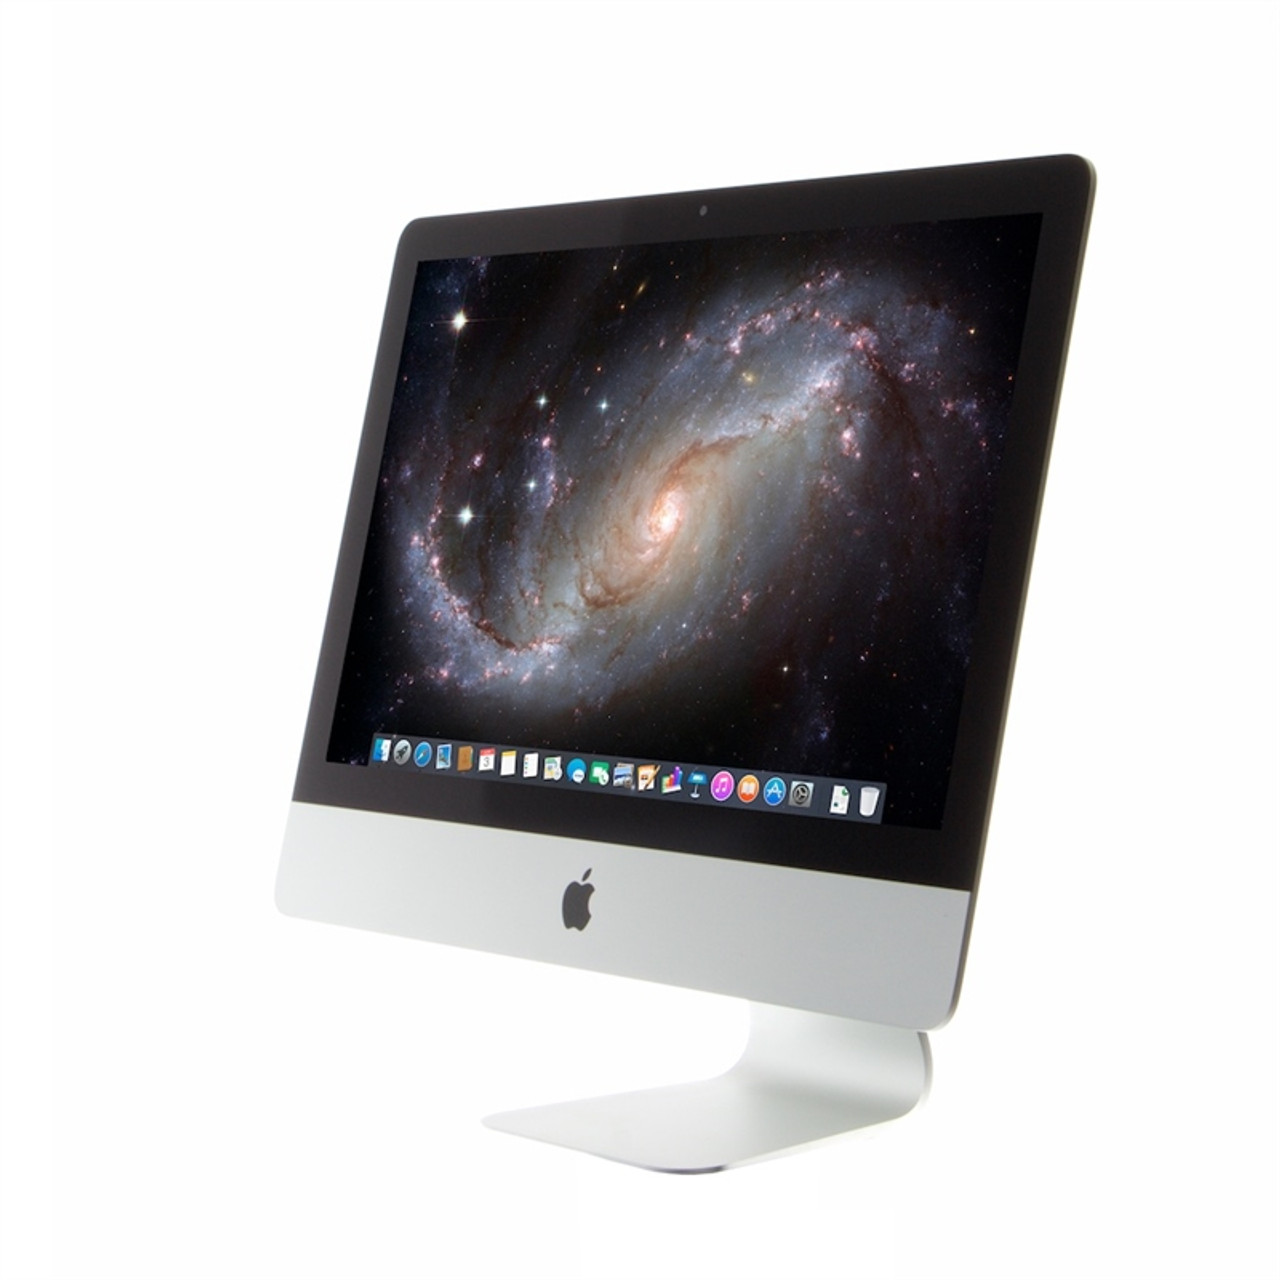 Apple iMac 21.5-inch 2.7GHz Quad-core i5 (Late 2012) MD093LL/A